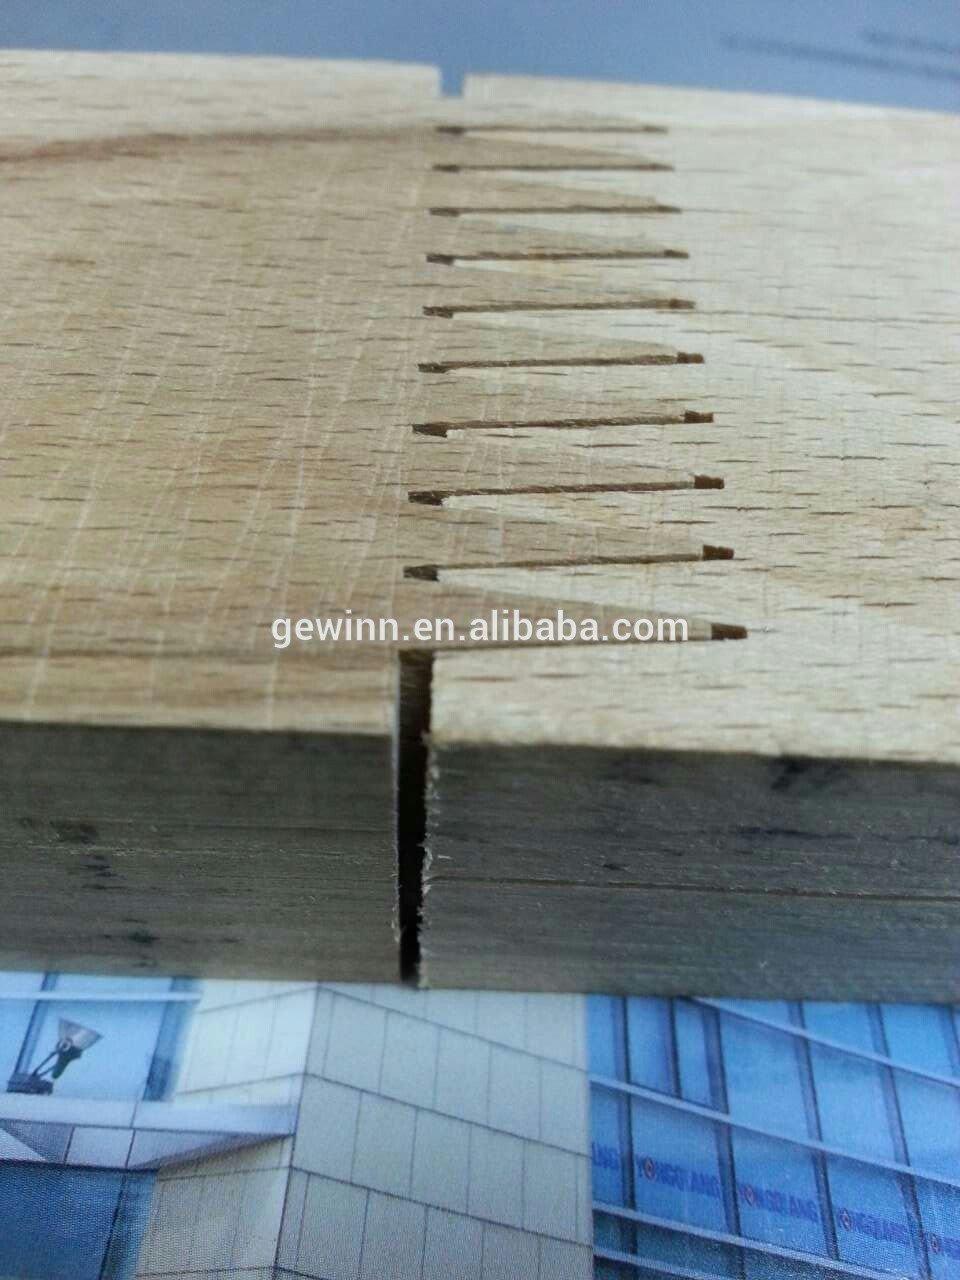 hotsale cnc industrial woodworking tools heads Gewinn company